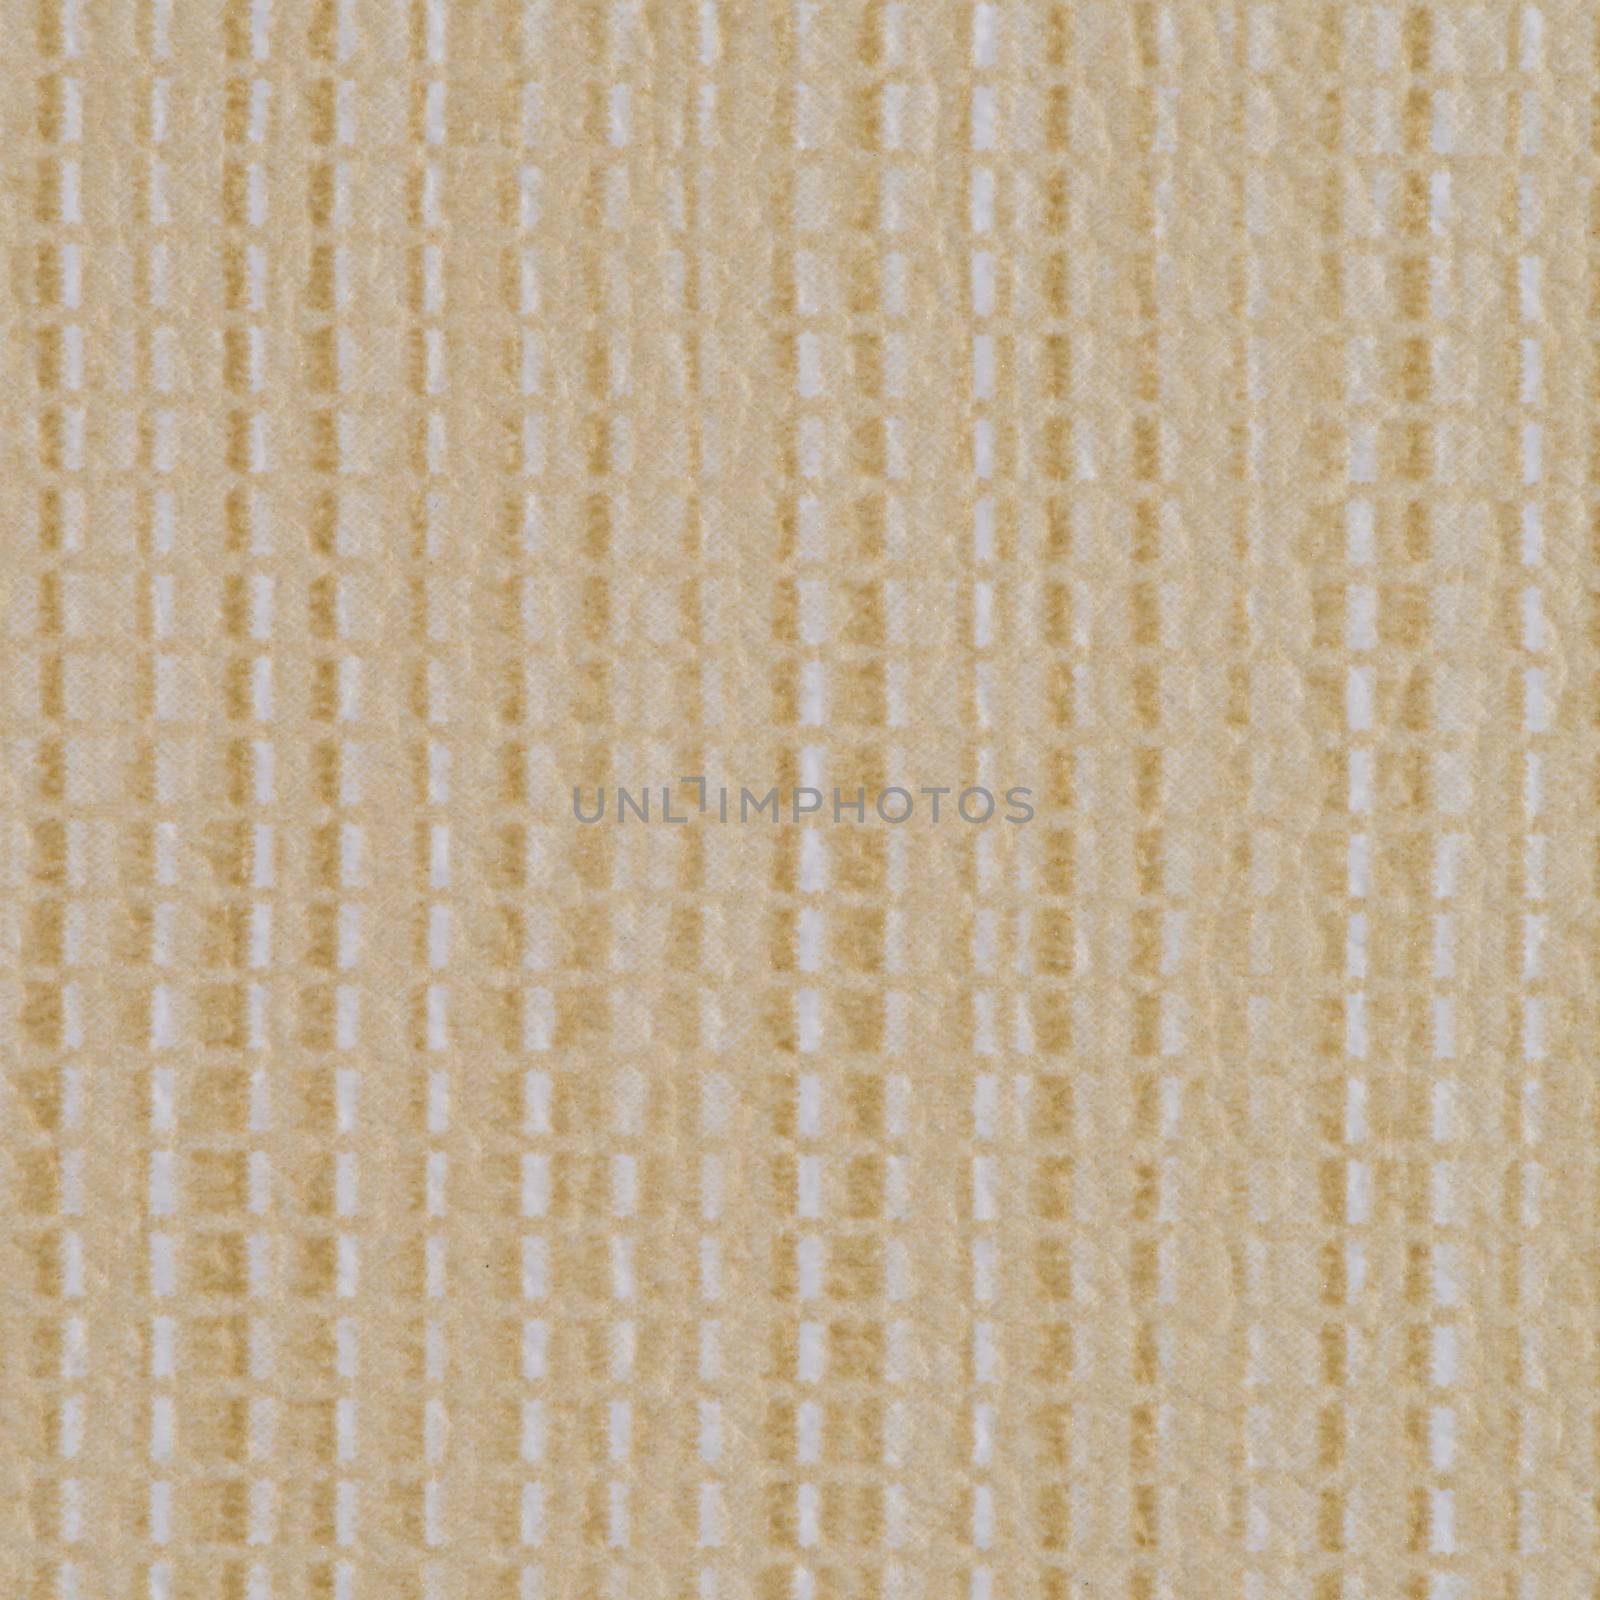 Yellow vinyl texture by homydesign